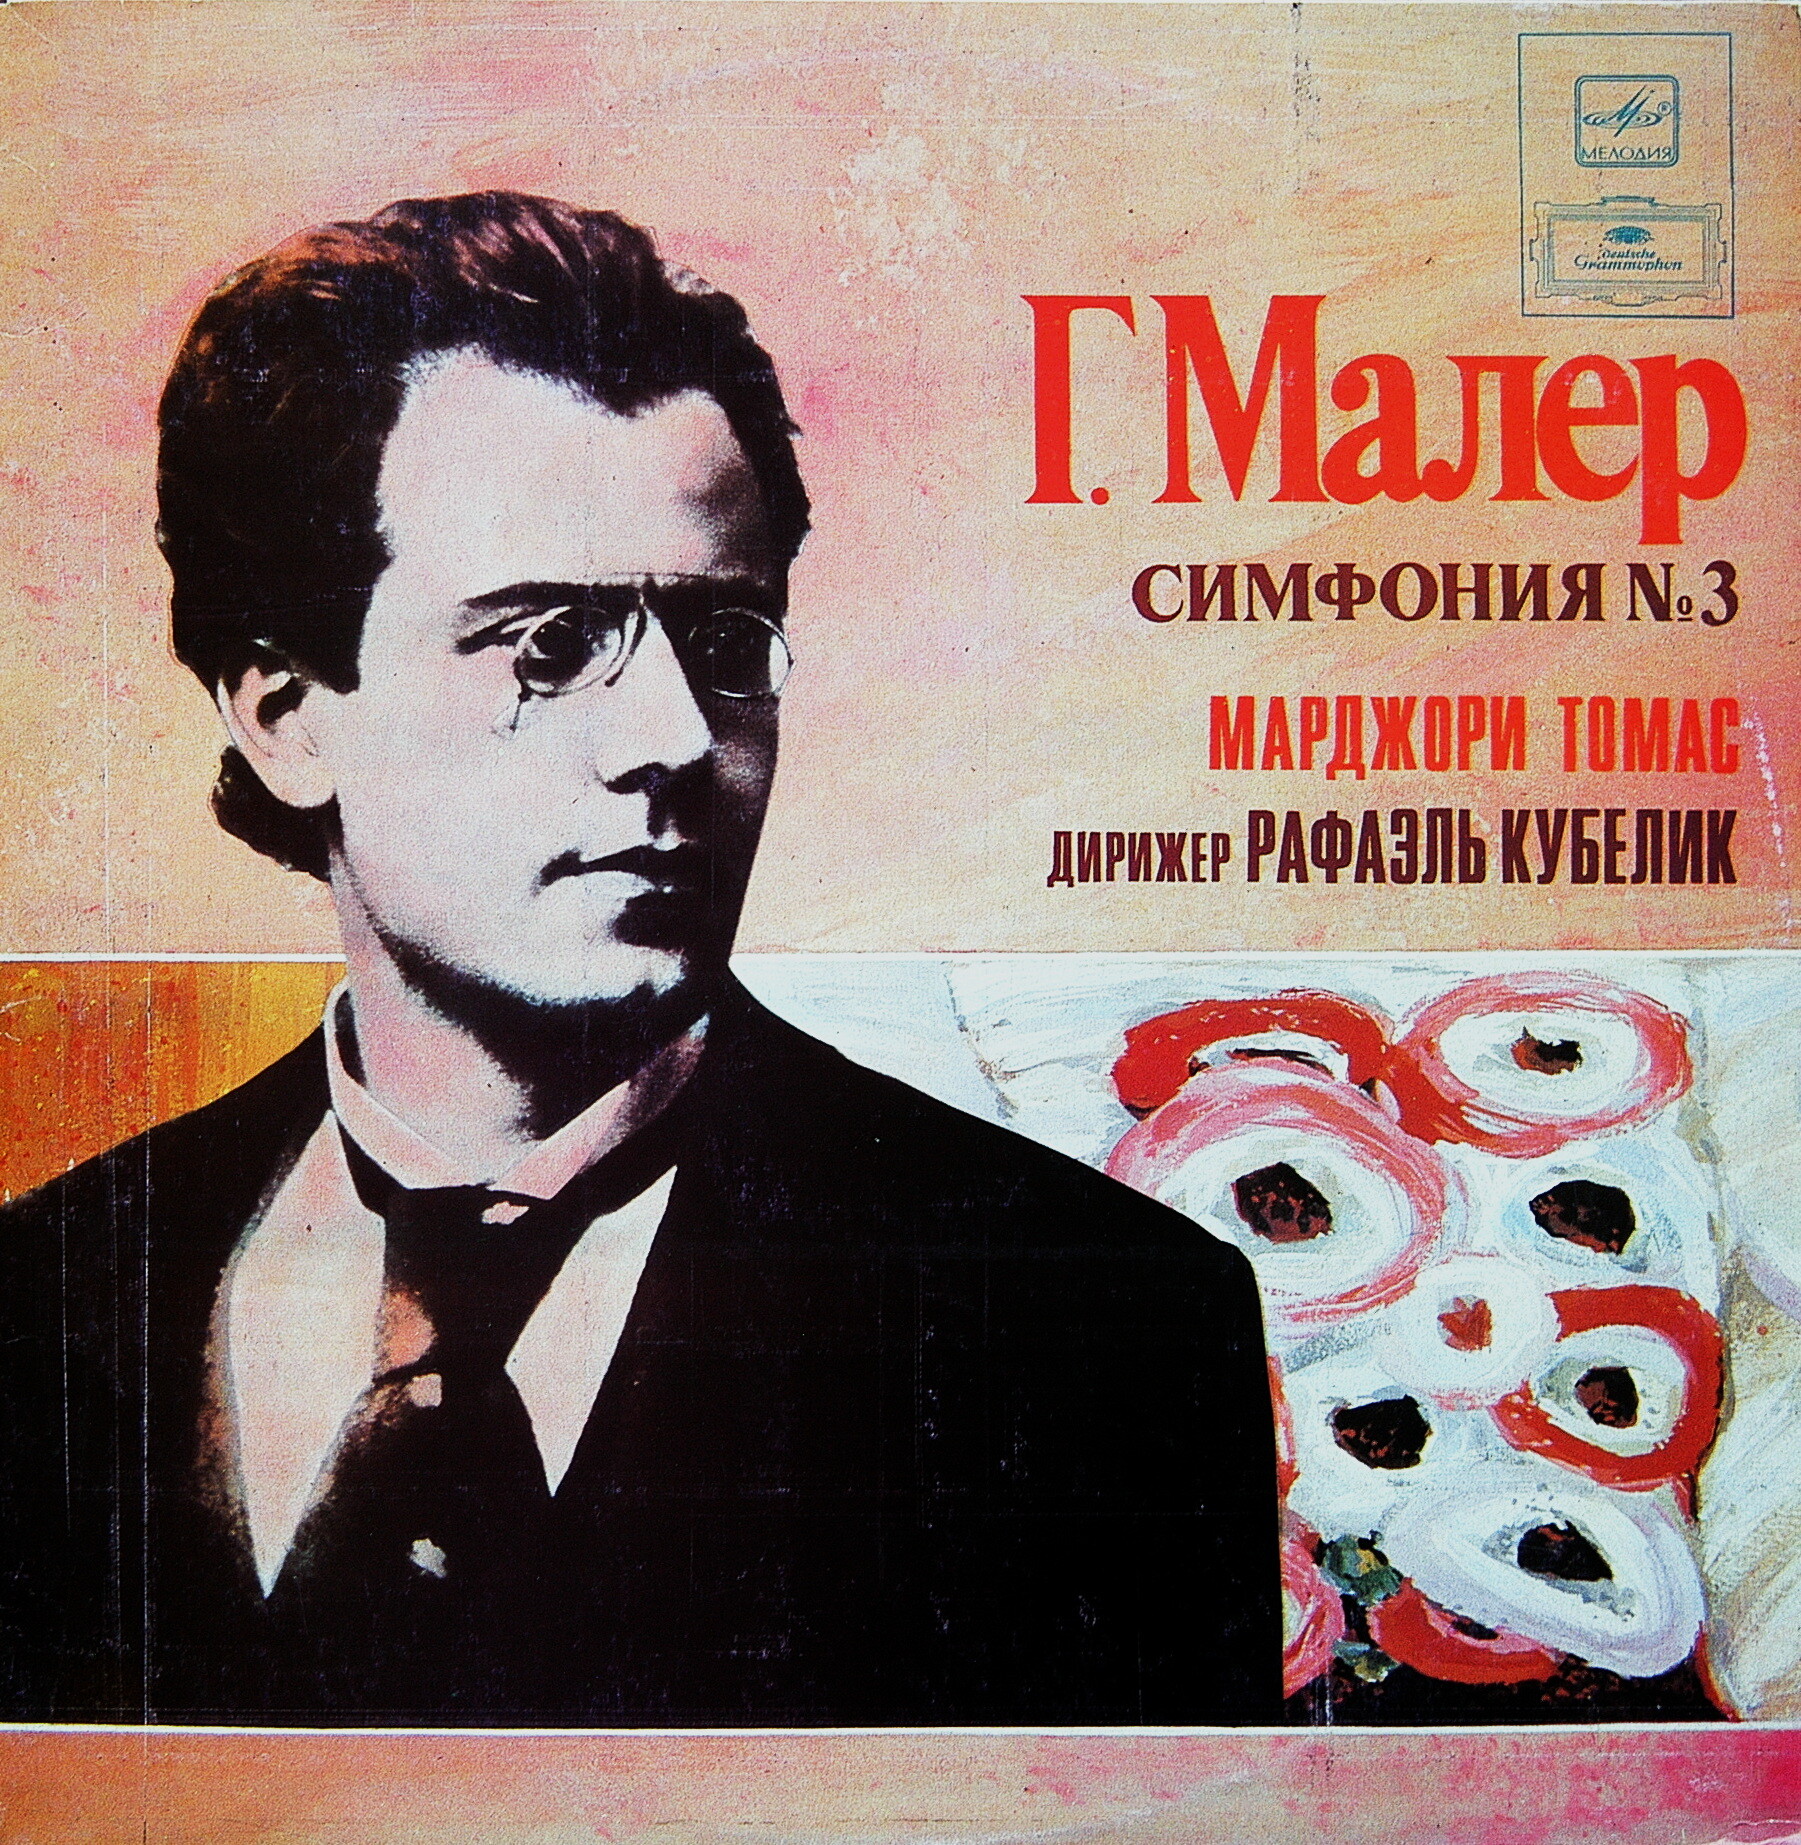 Г. МАЛЕР (1860-1911): Симфония № 3 ре минор